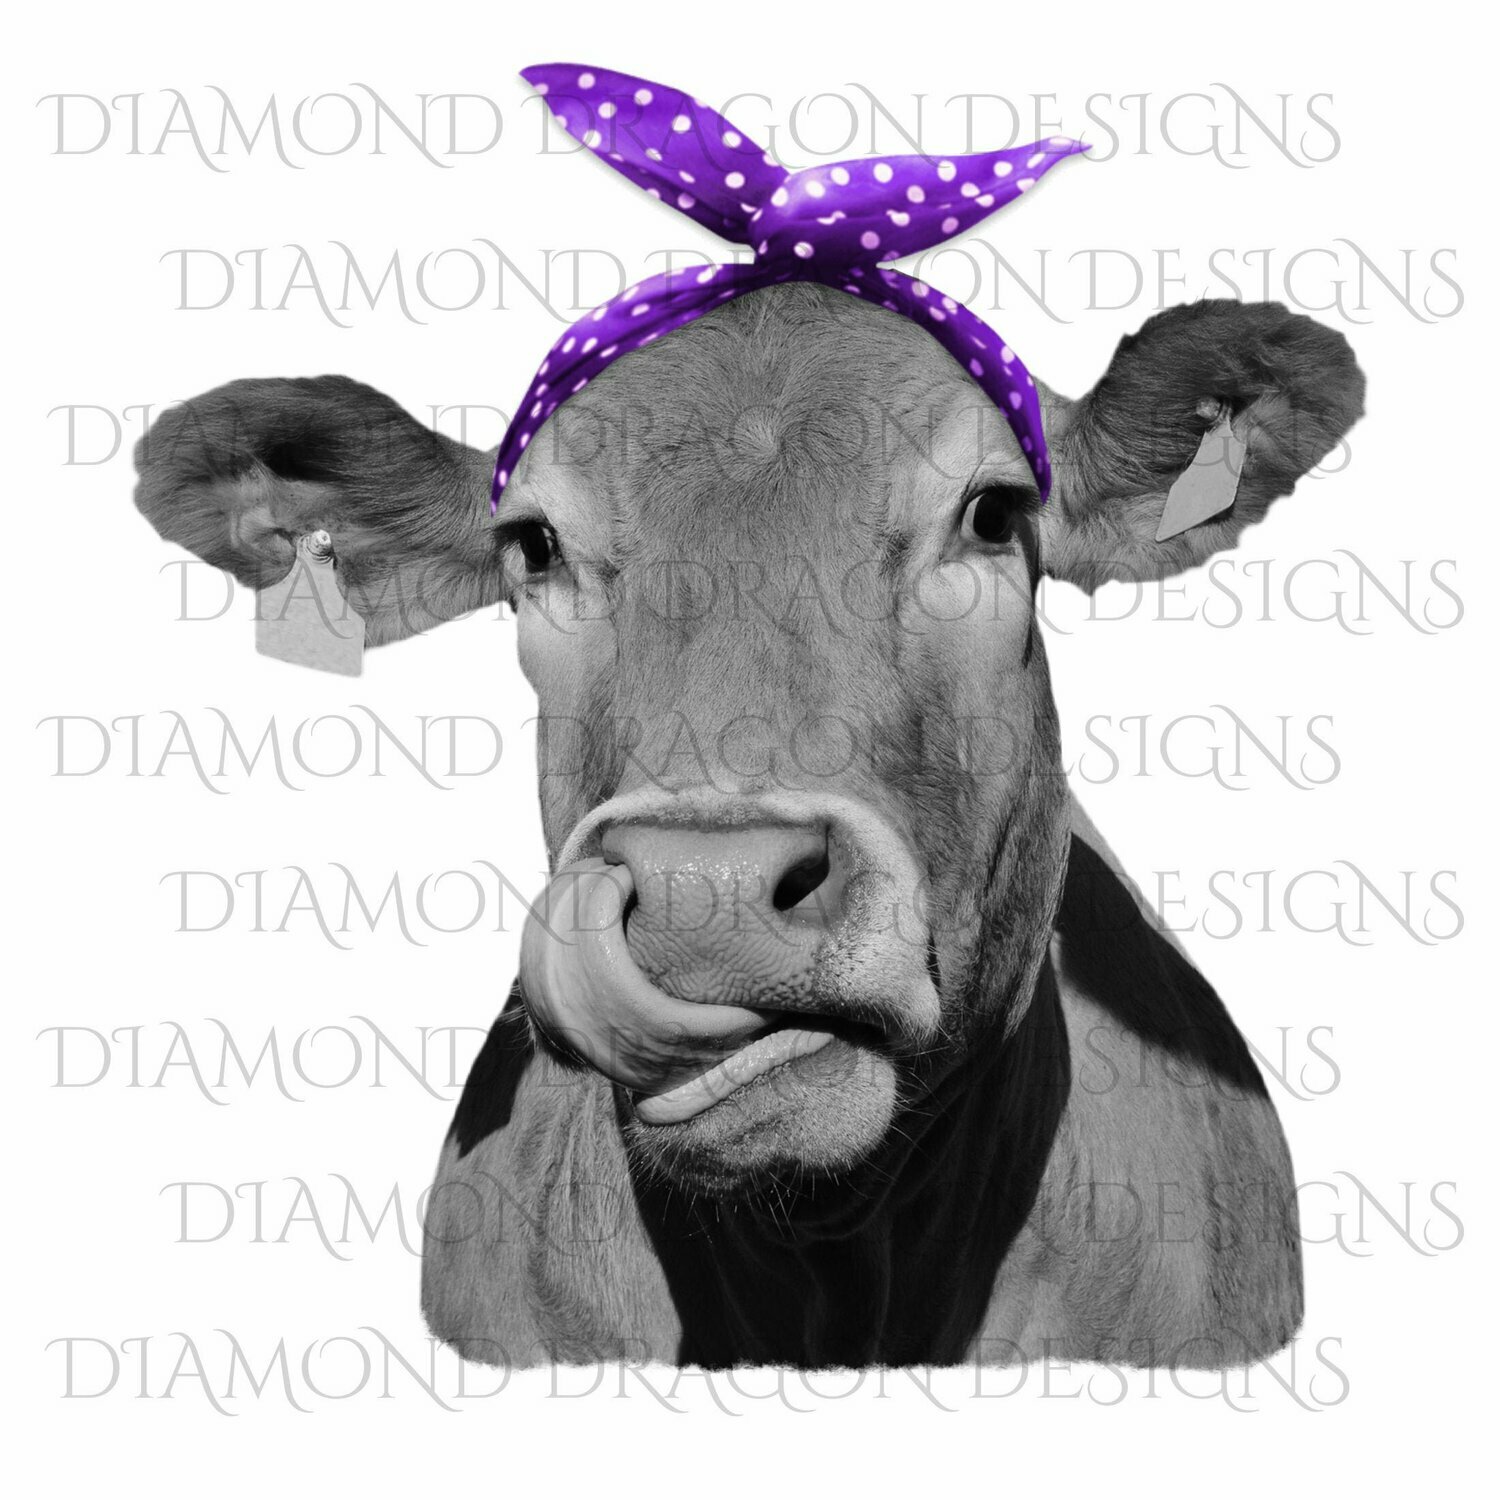 Cows - Heifer, Image, Cute Cow with Purple Polkadot Bandana, Cowlick, Cow Tongue Out, Waterslide